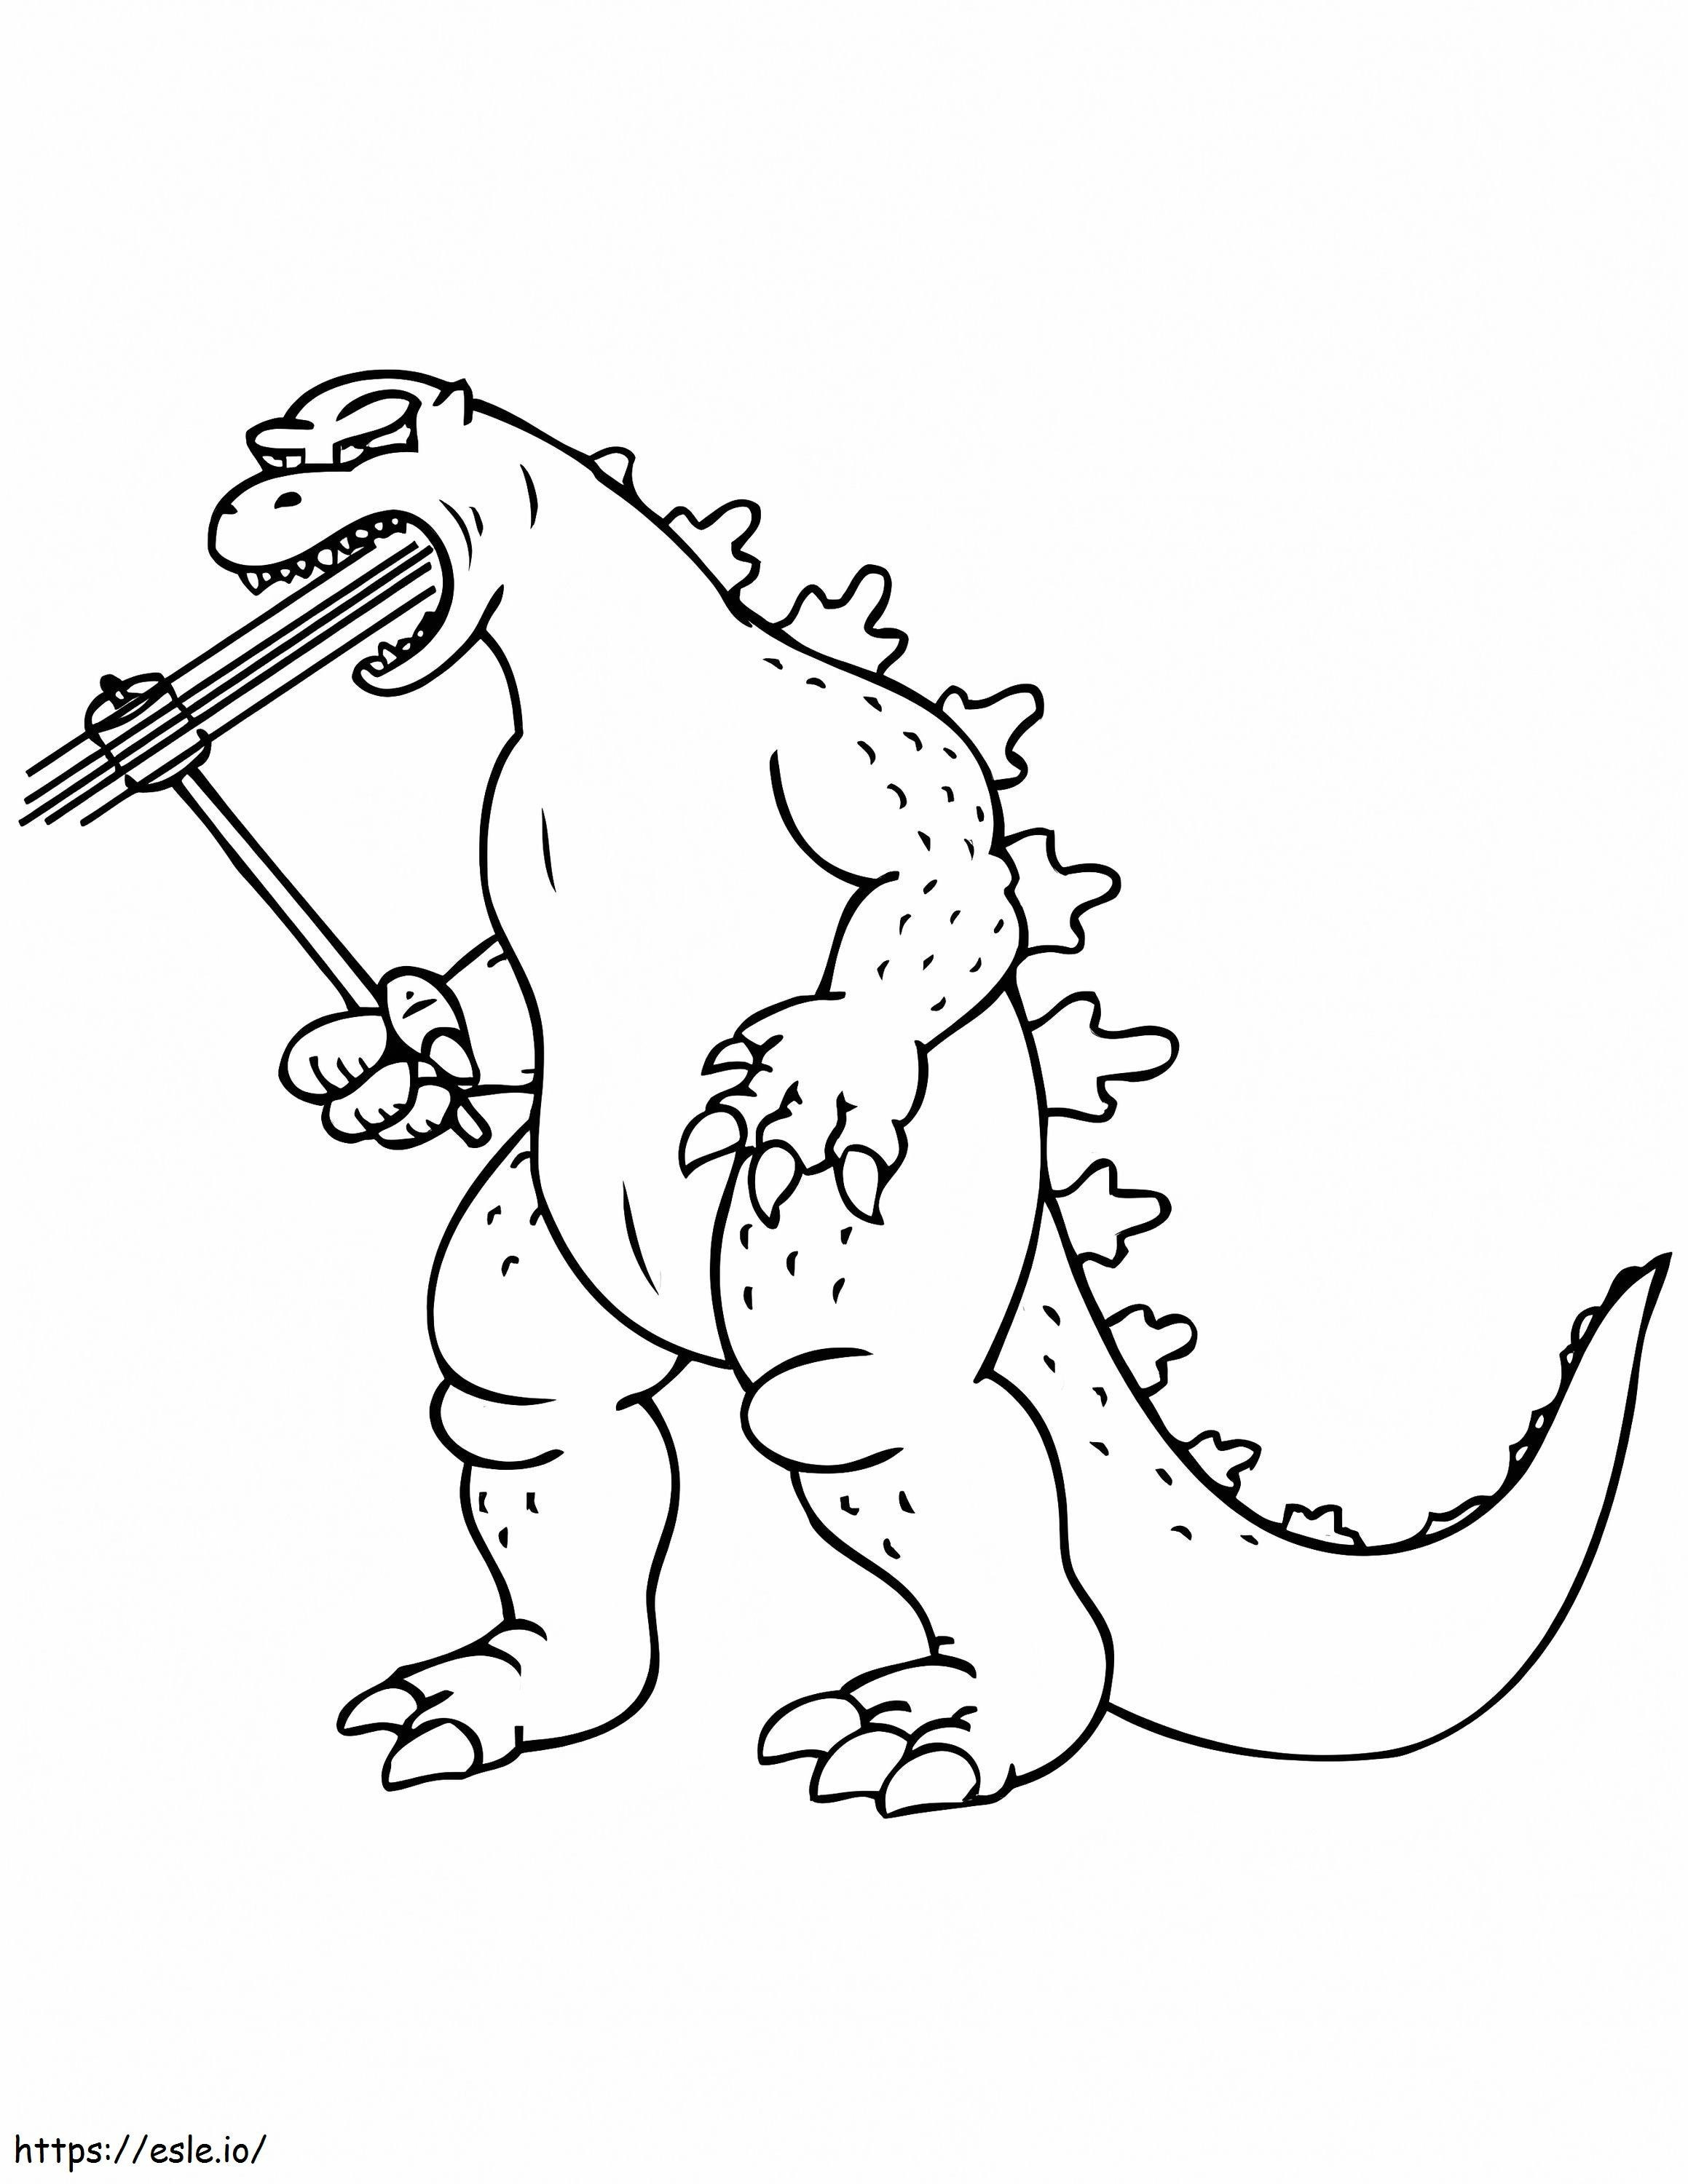 Godzilla Holding Marshmello coloring page